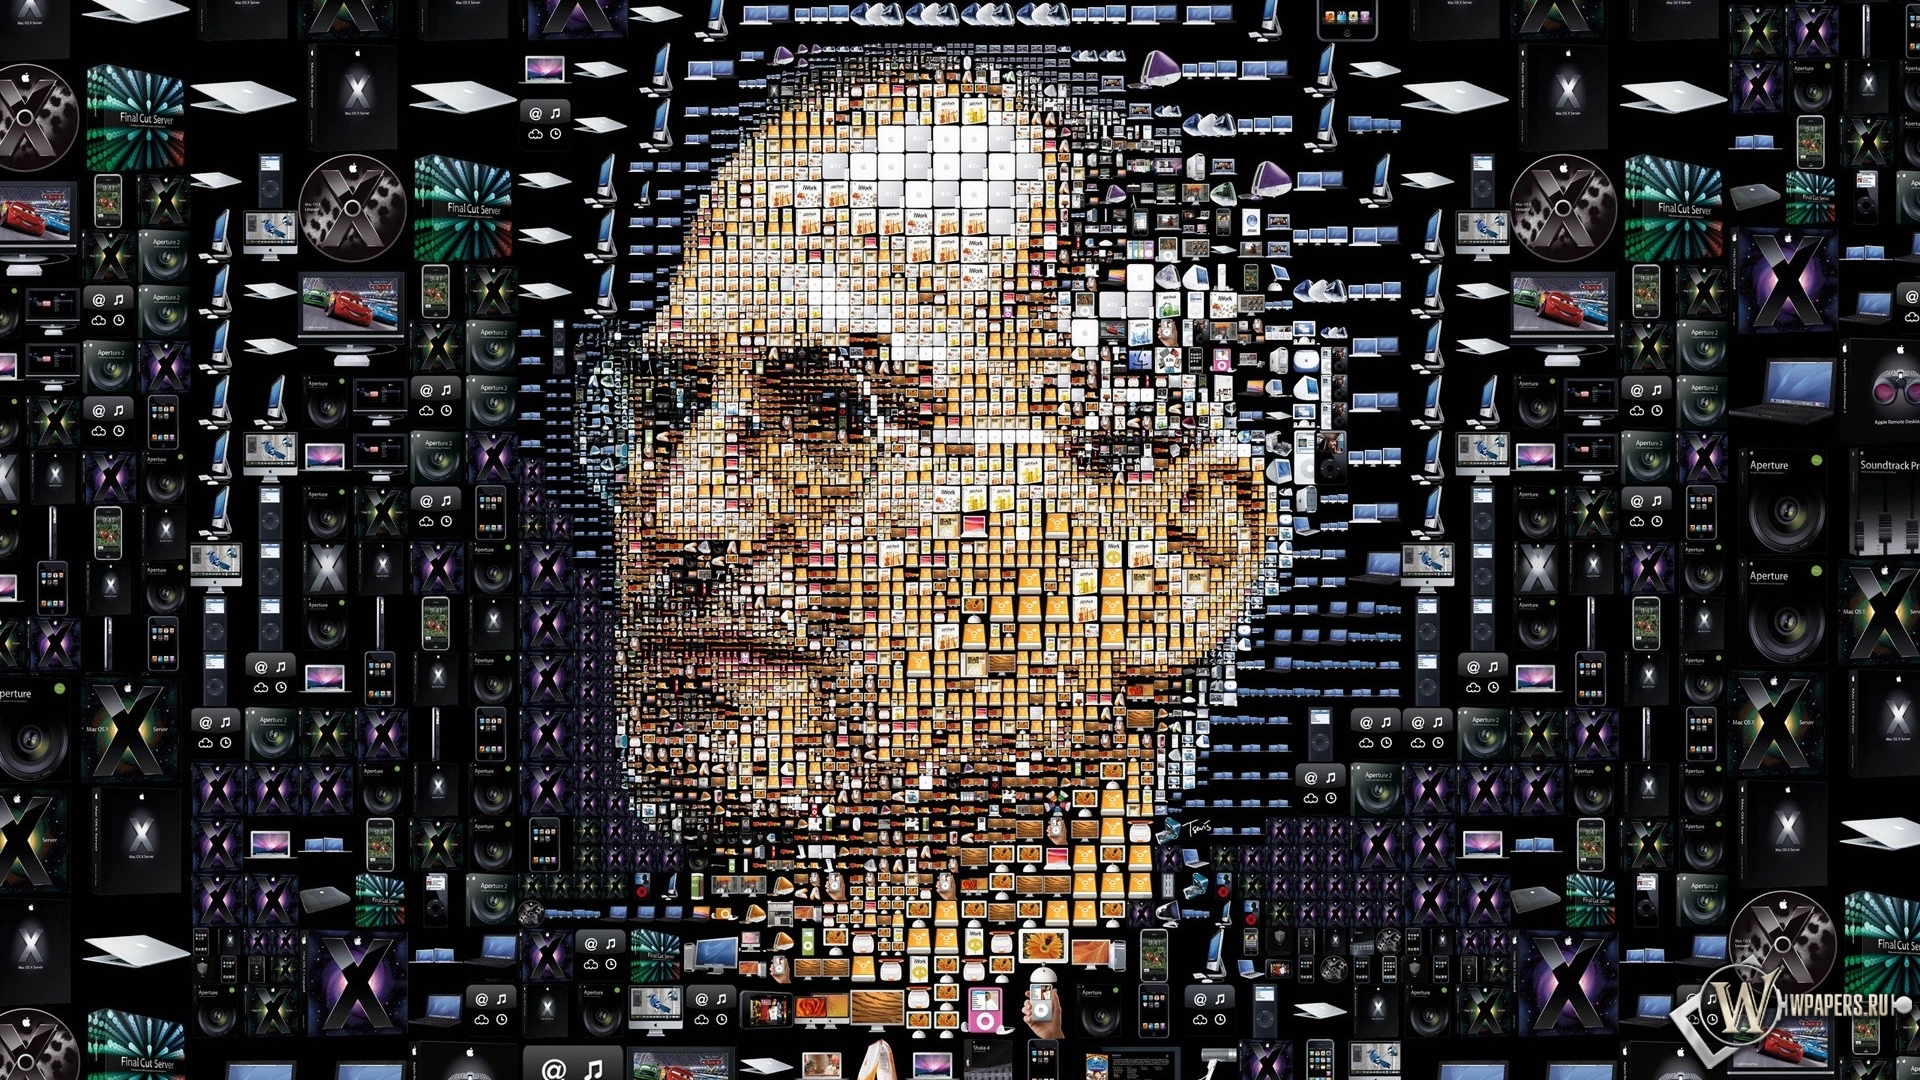 Steve Jobs 1920x1080